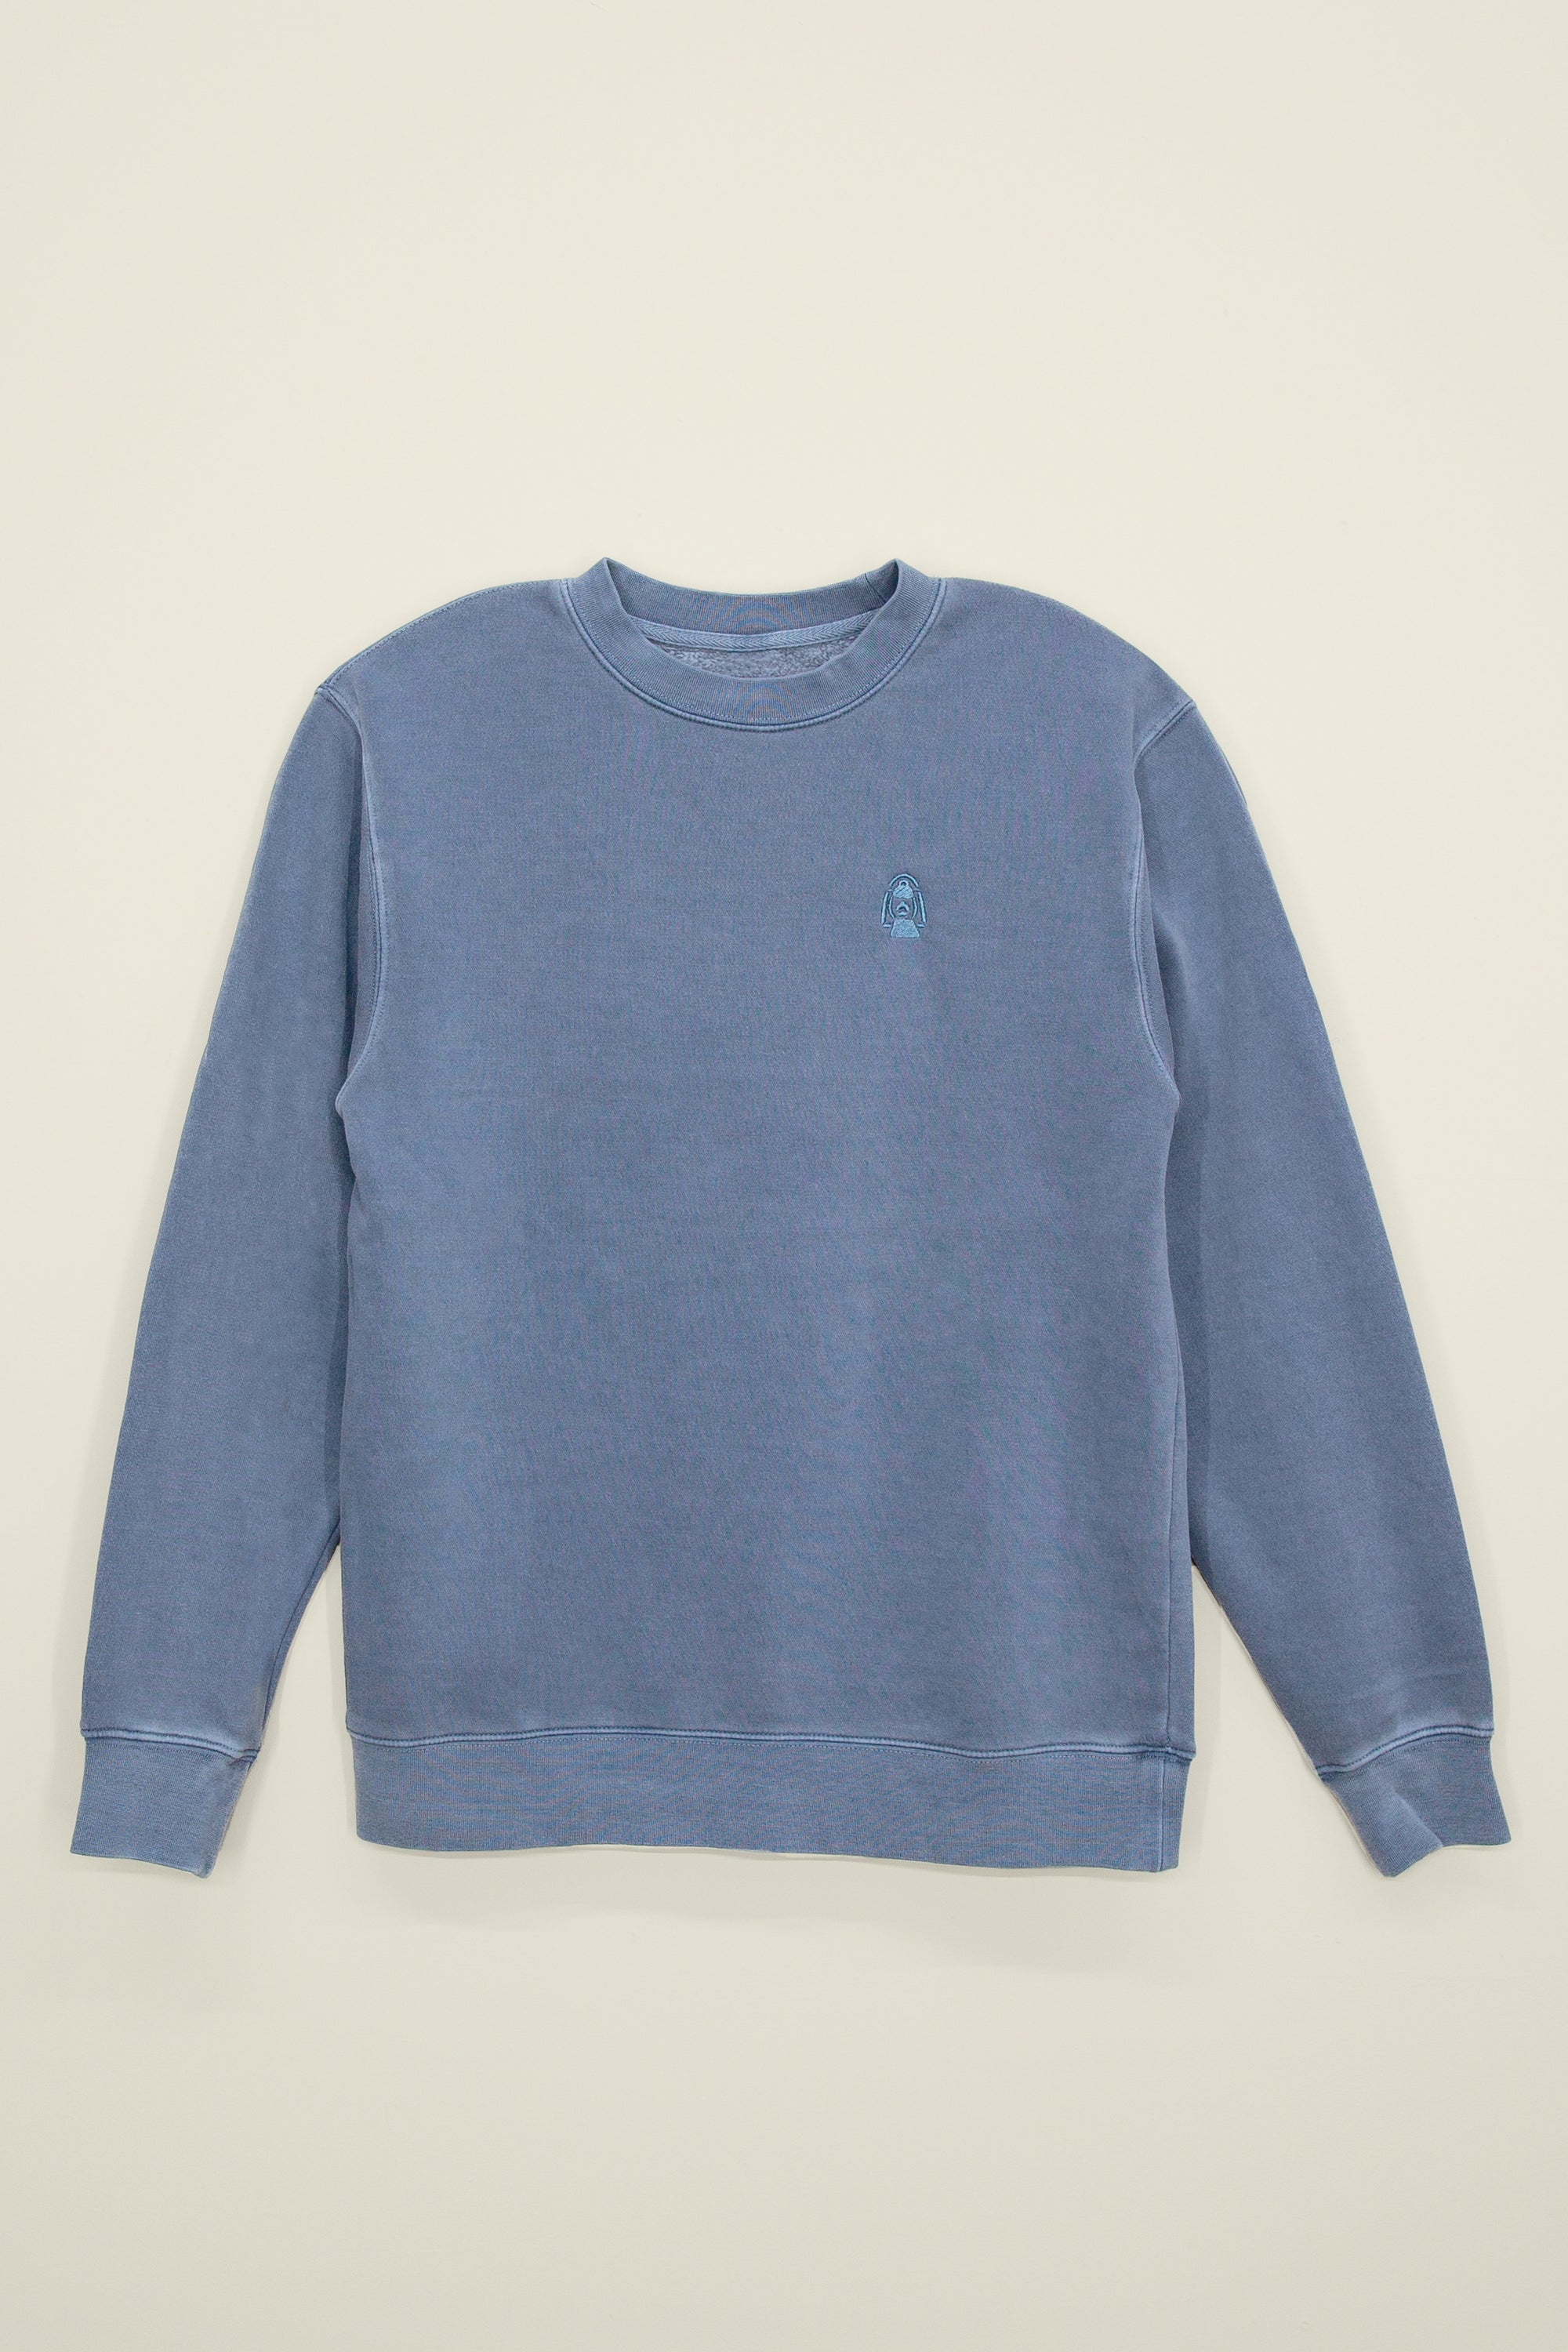 KSG lantern sweatshirt, slate blue